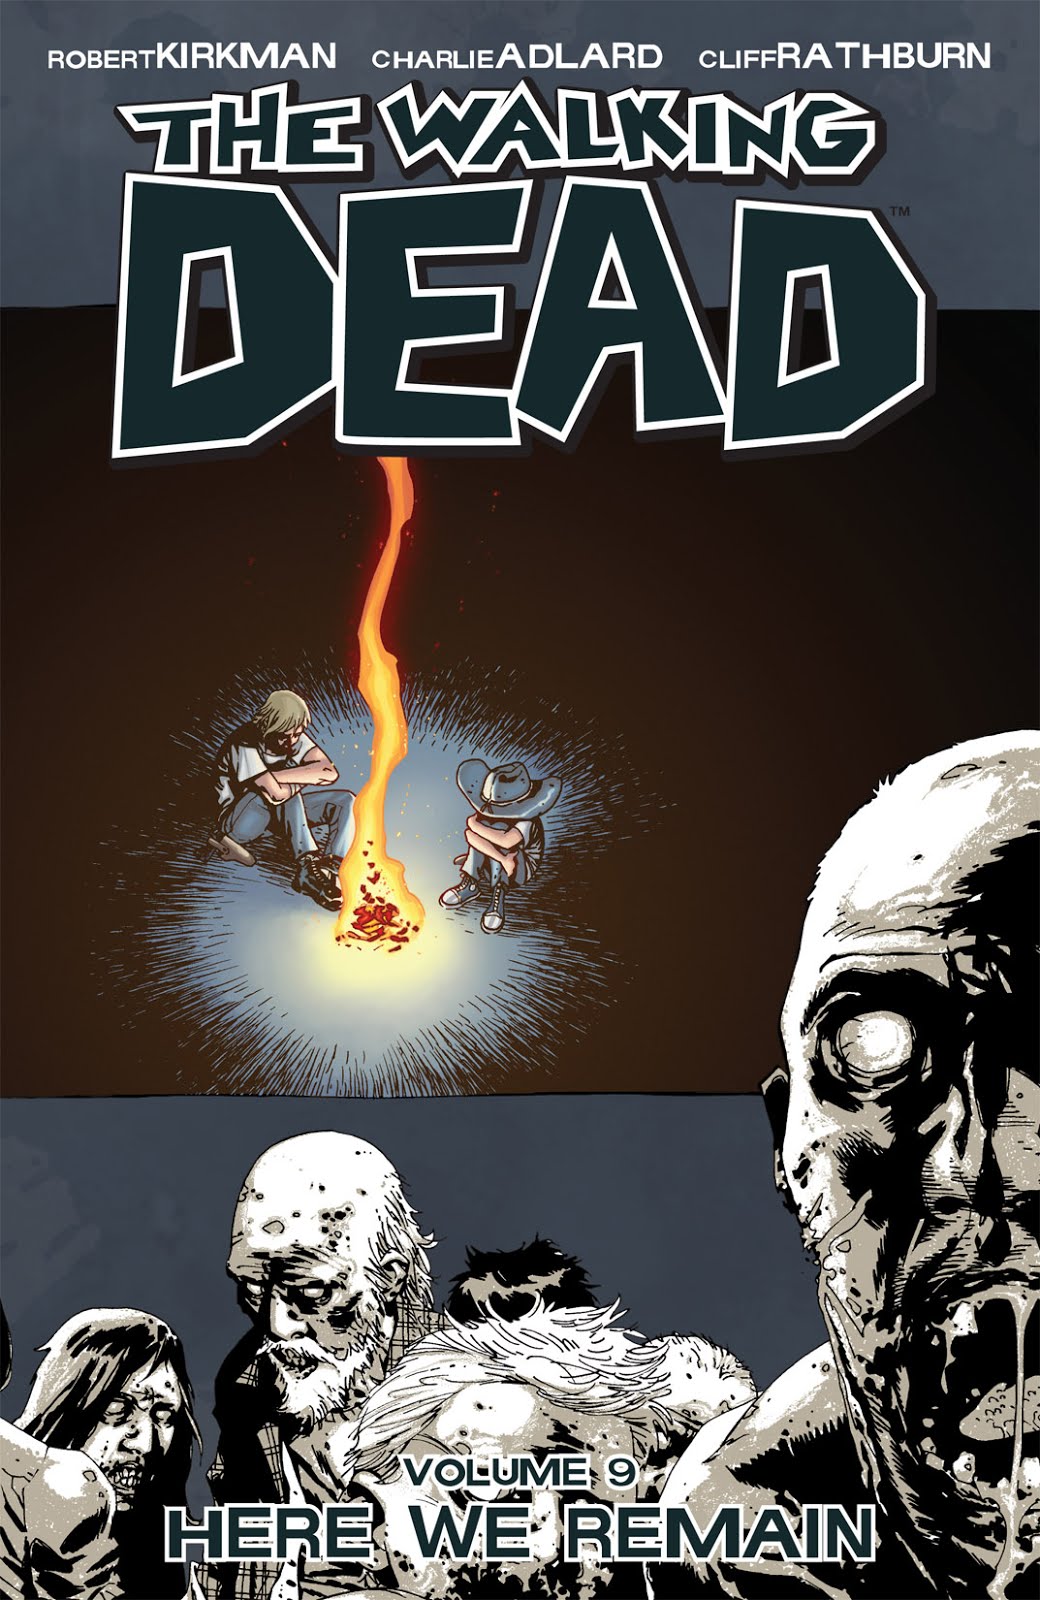 The Walking Dead, Vol. 9: Here We Remain Robert Kirkman, Charlie Adlard and Cliff Rathburn